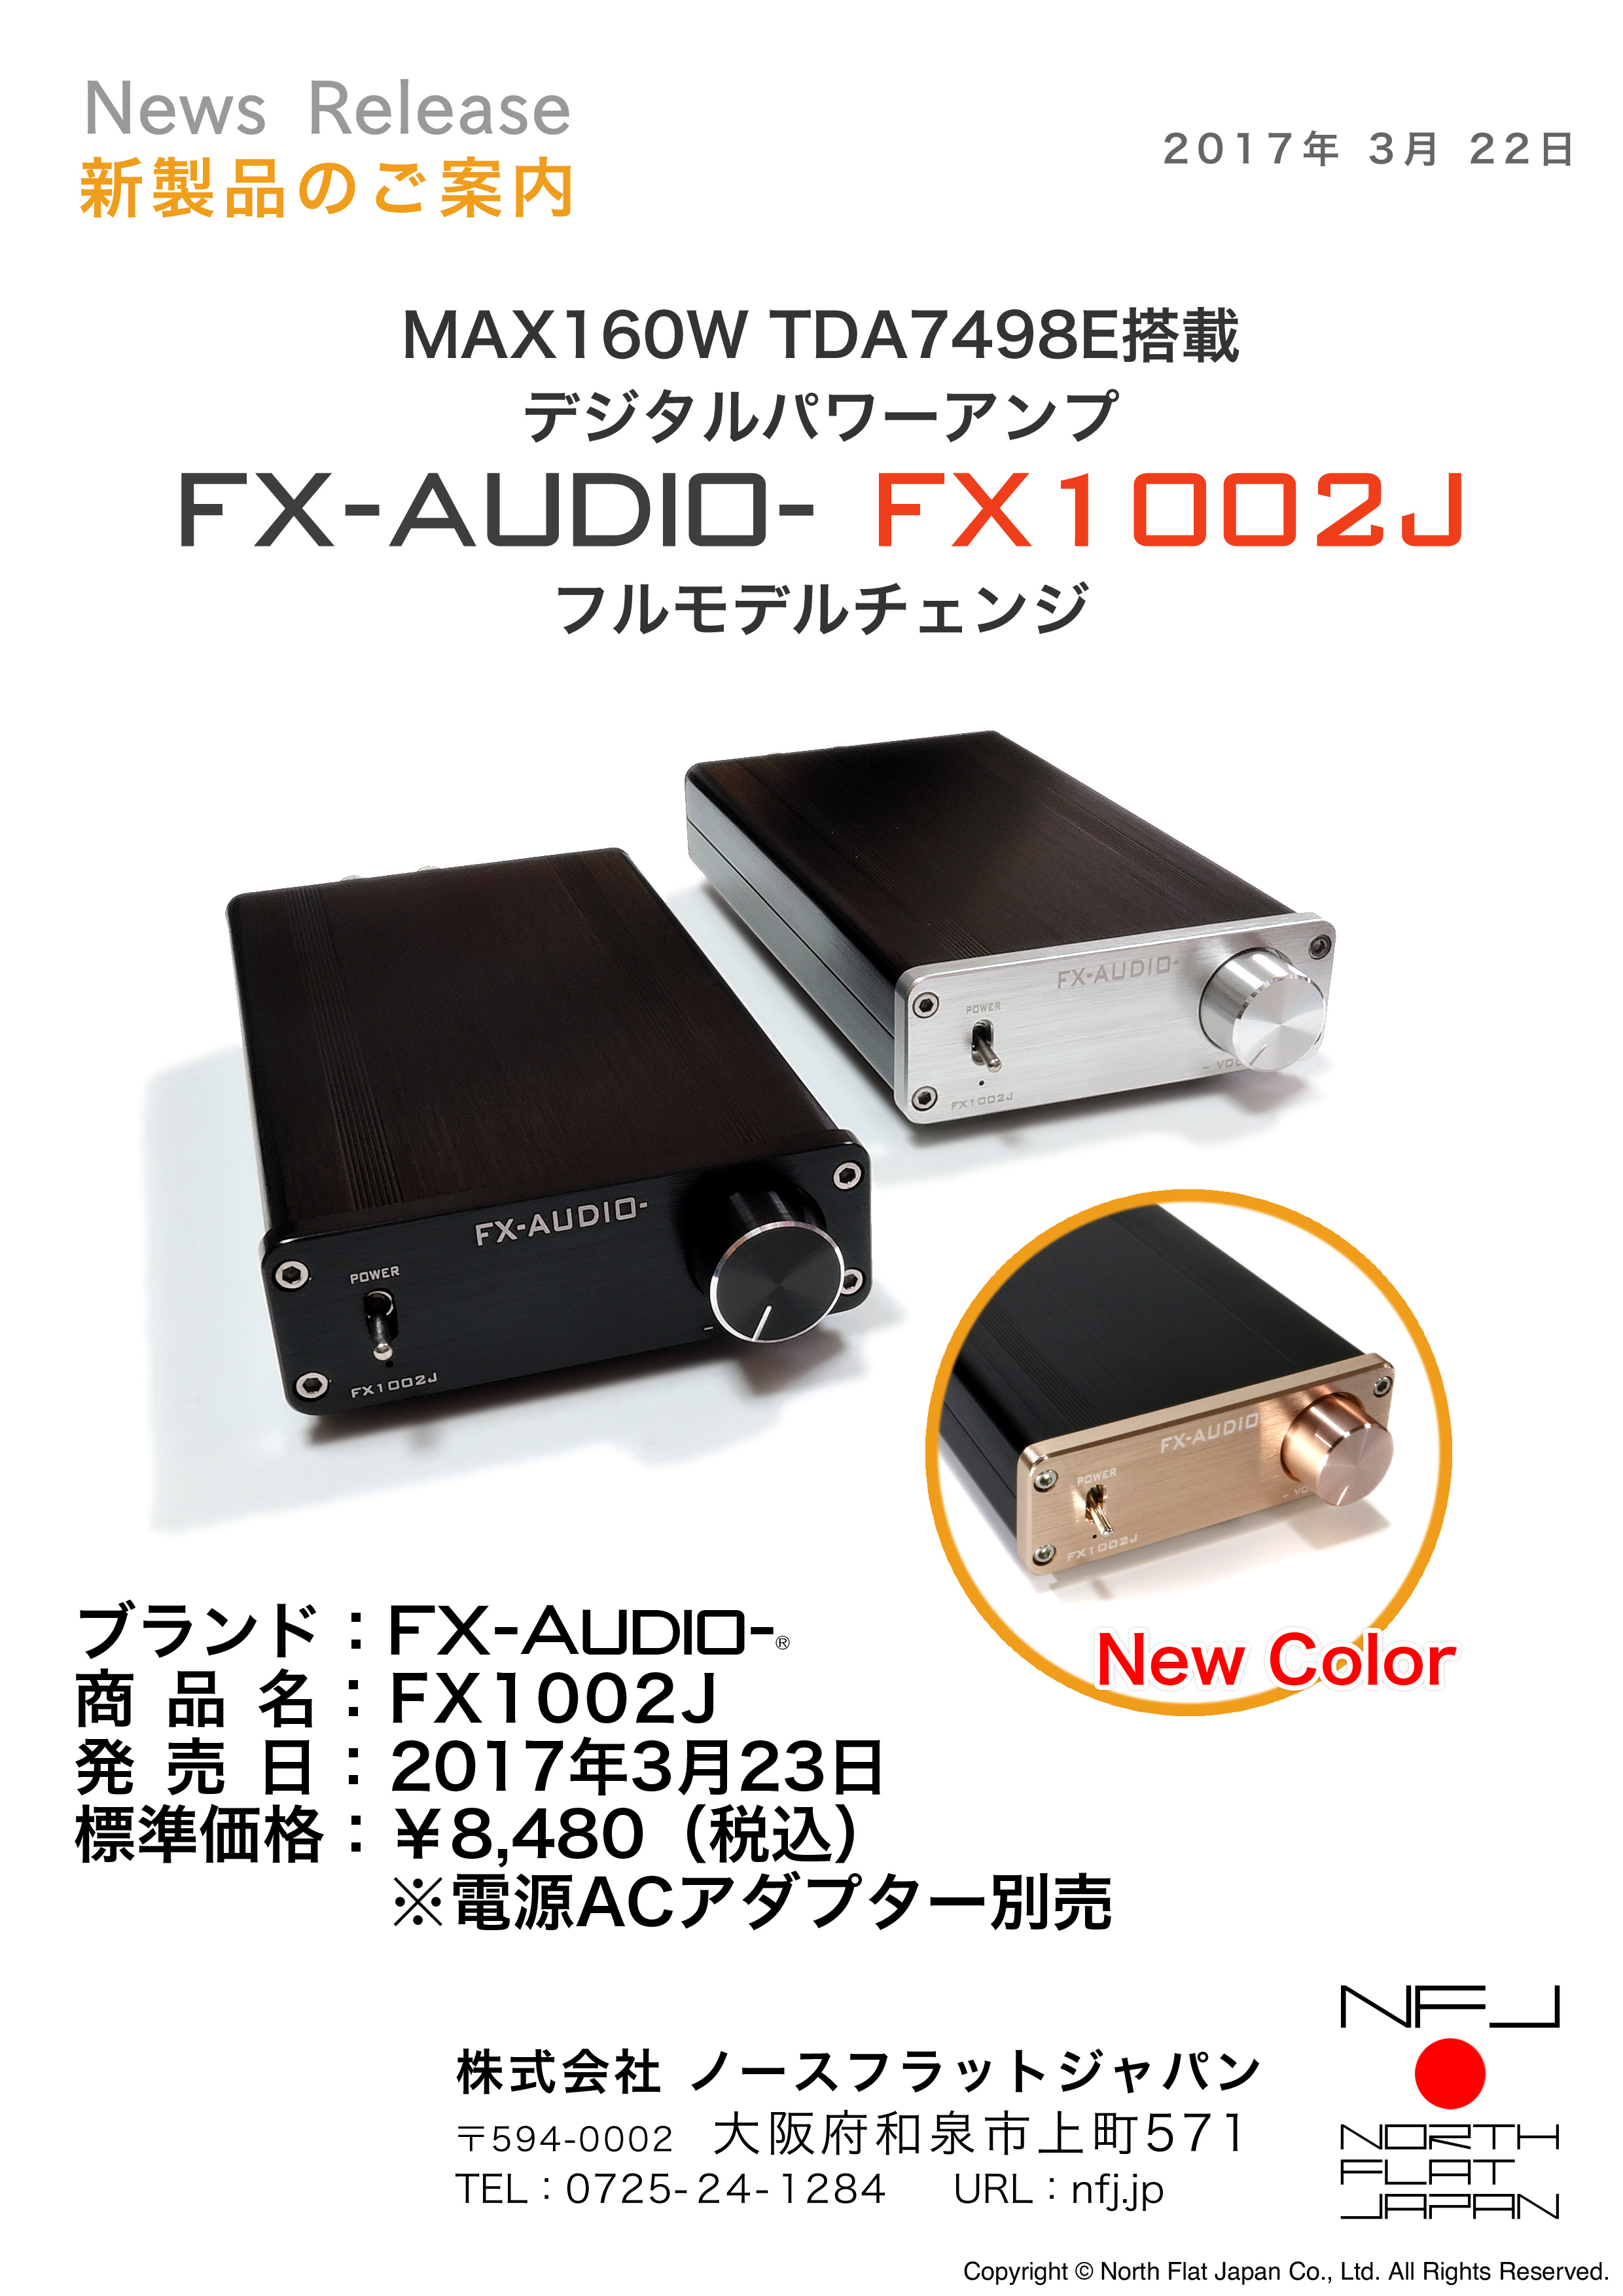 FX-AUDIO- ハイパワーデジタルアンプ『FX1002J』をフルモデルチェンジ